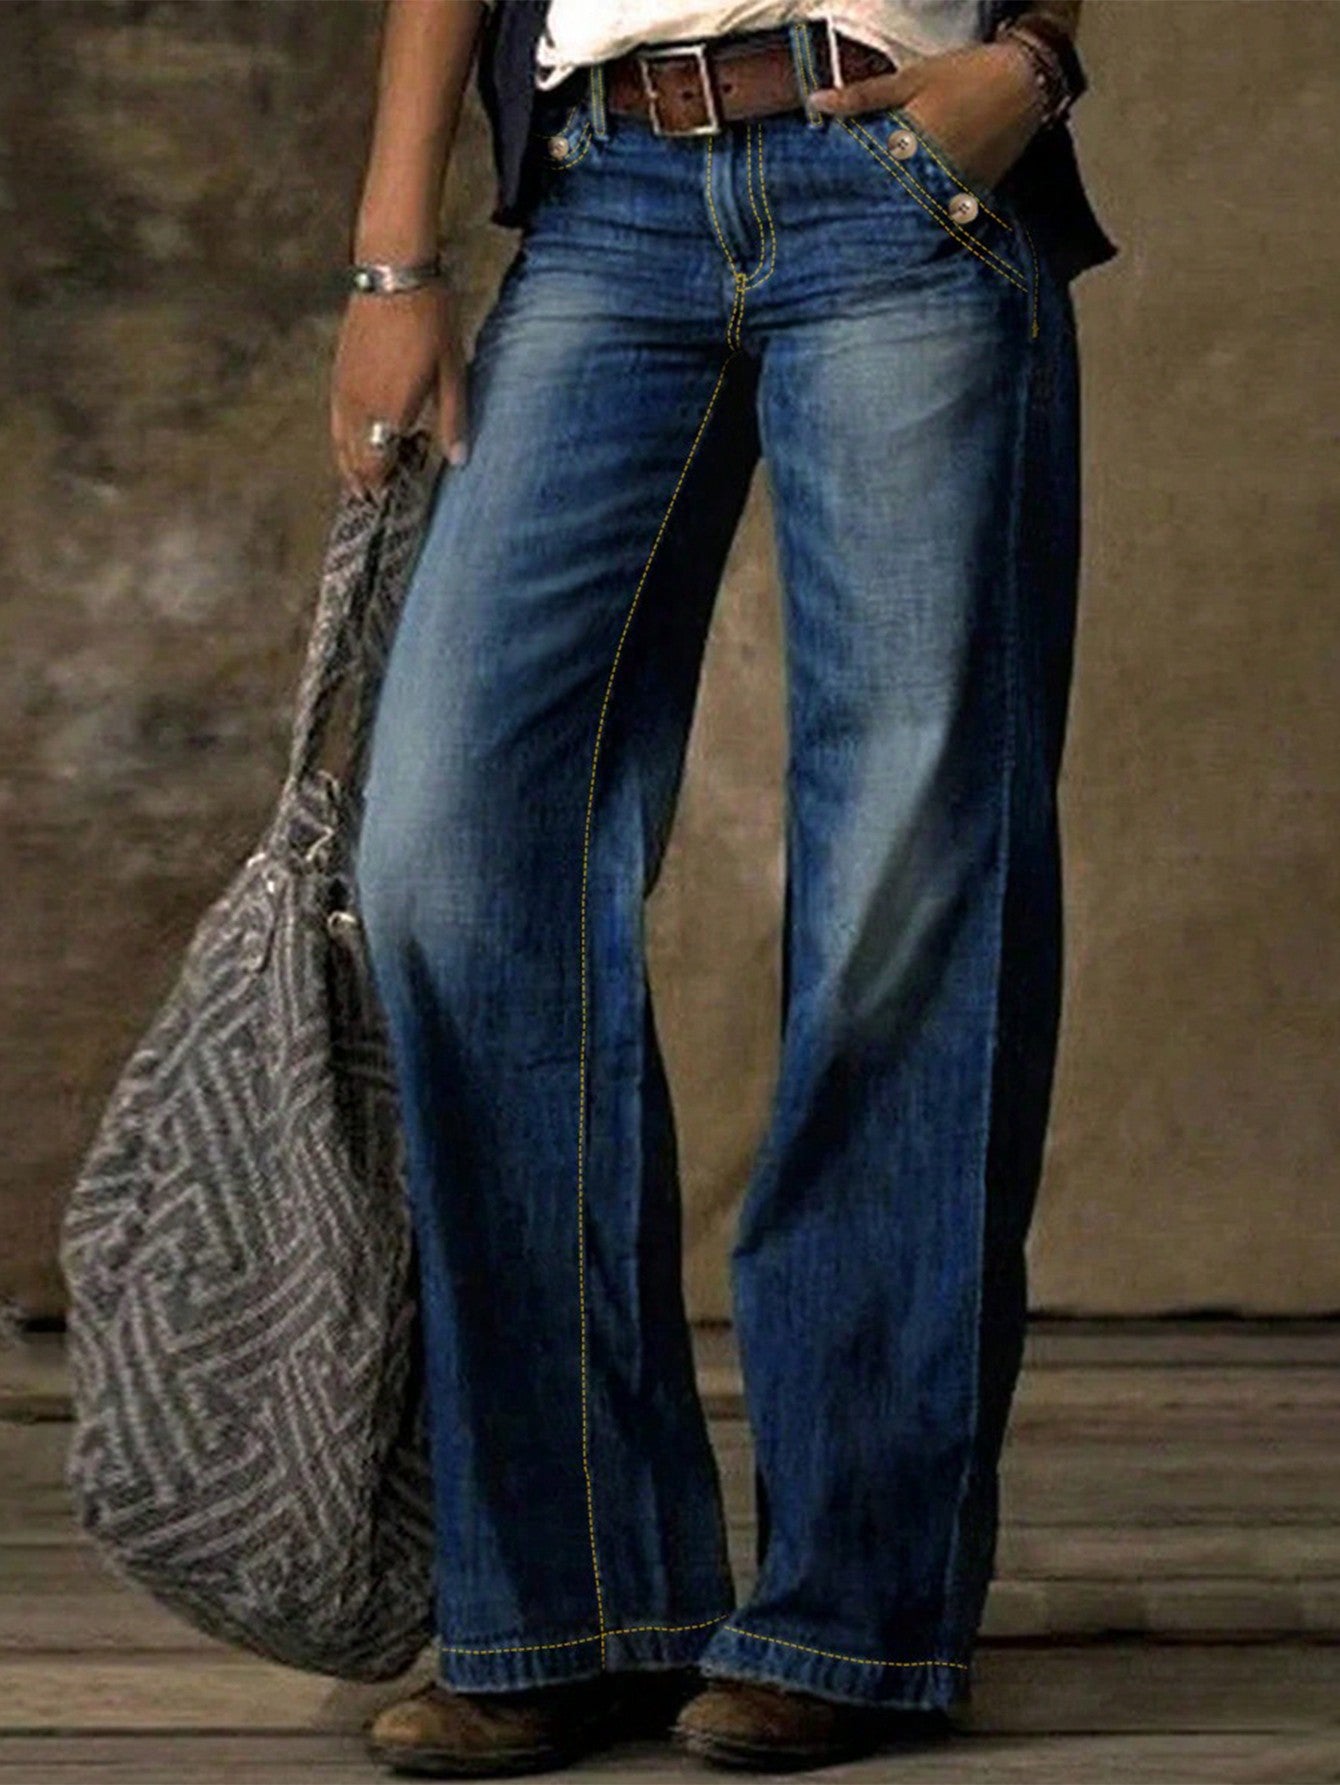 Classic Loose-Fit Straight Leg Denim Jeans - Timeless Women’s Fashion Staple